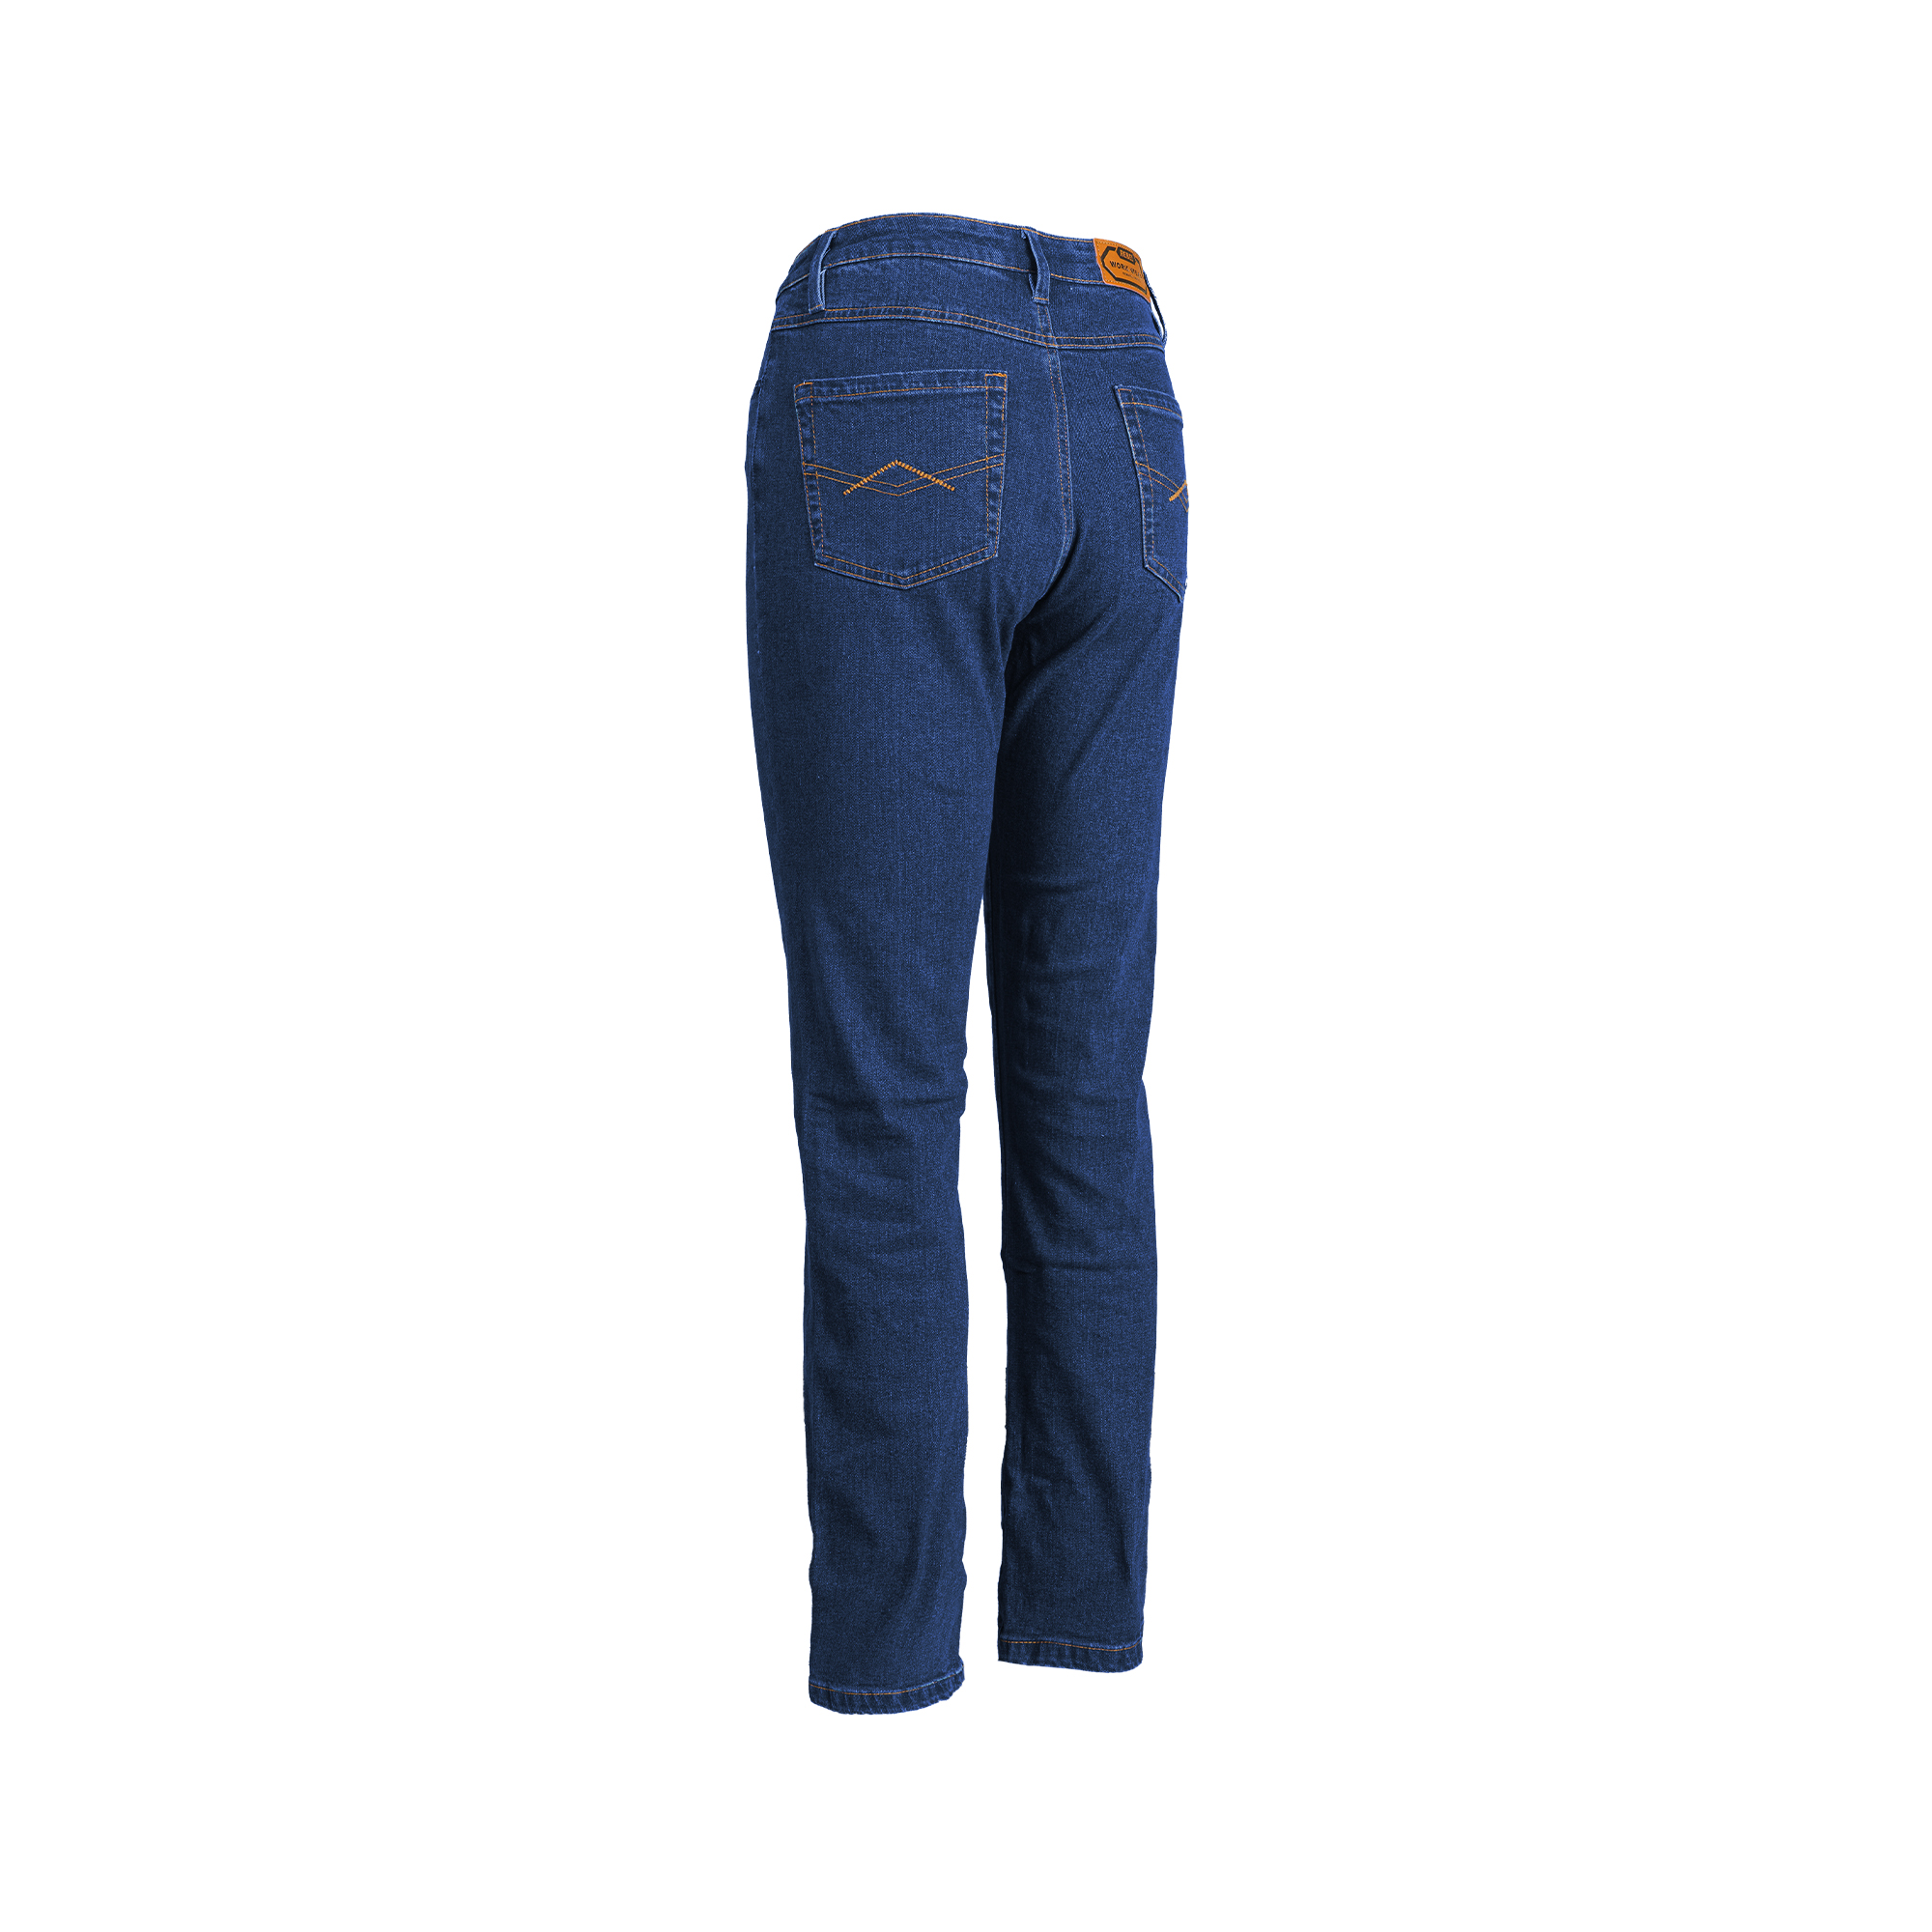 RSG_Workwear_Jeans_Womens_DarkBlue_Back_Angle